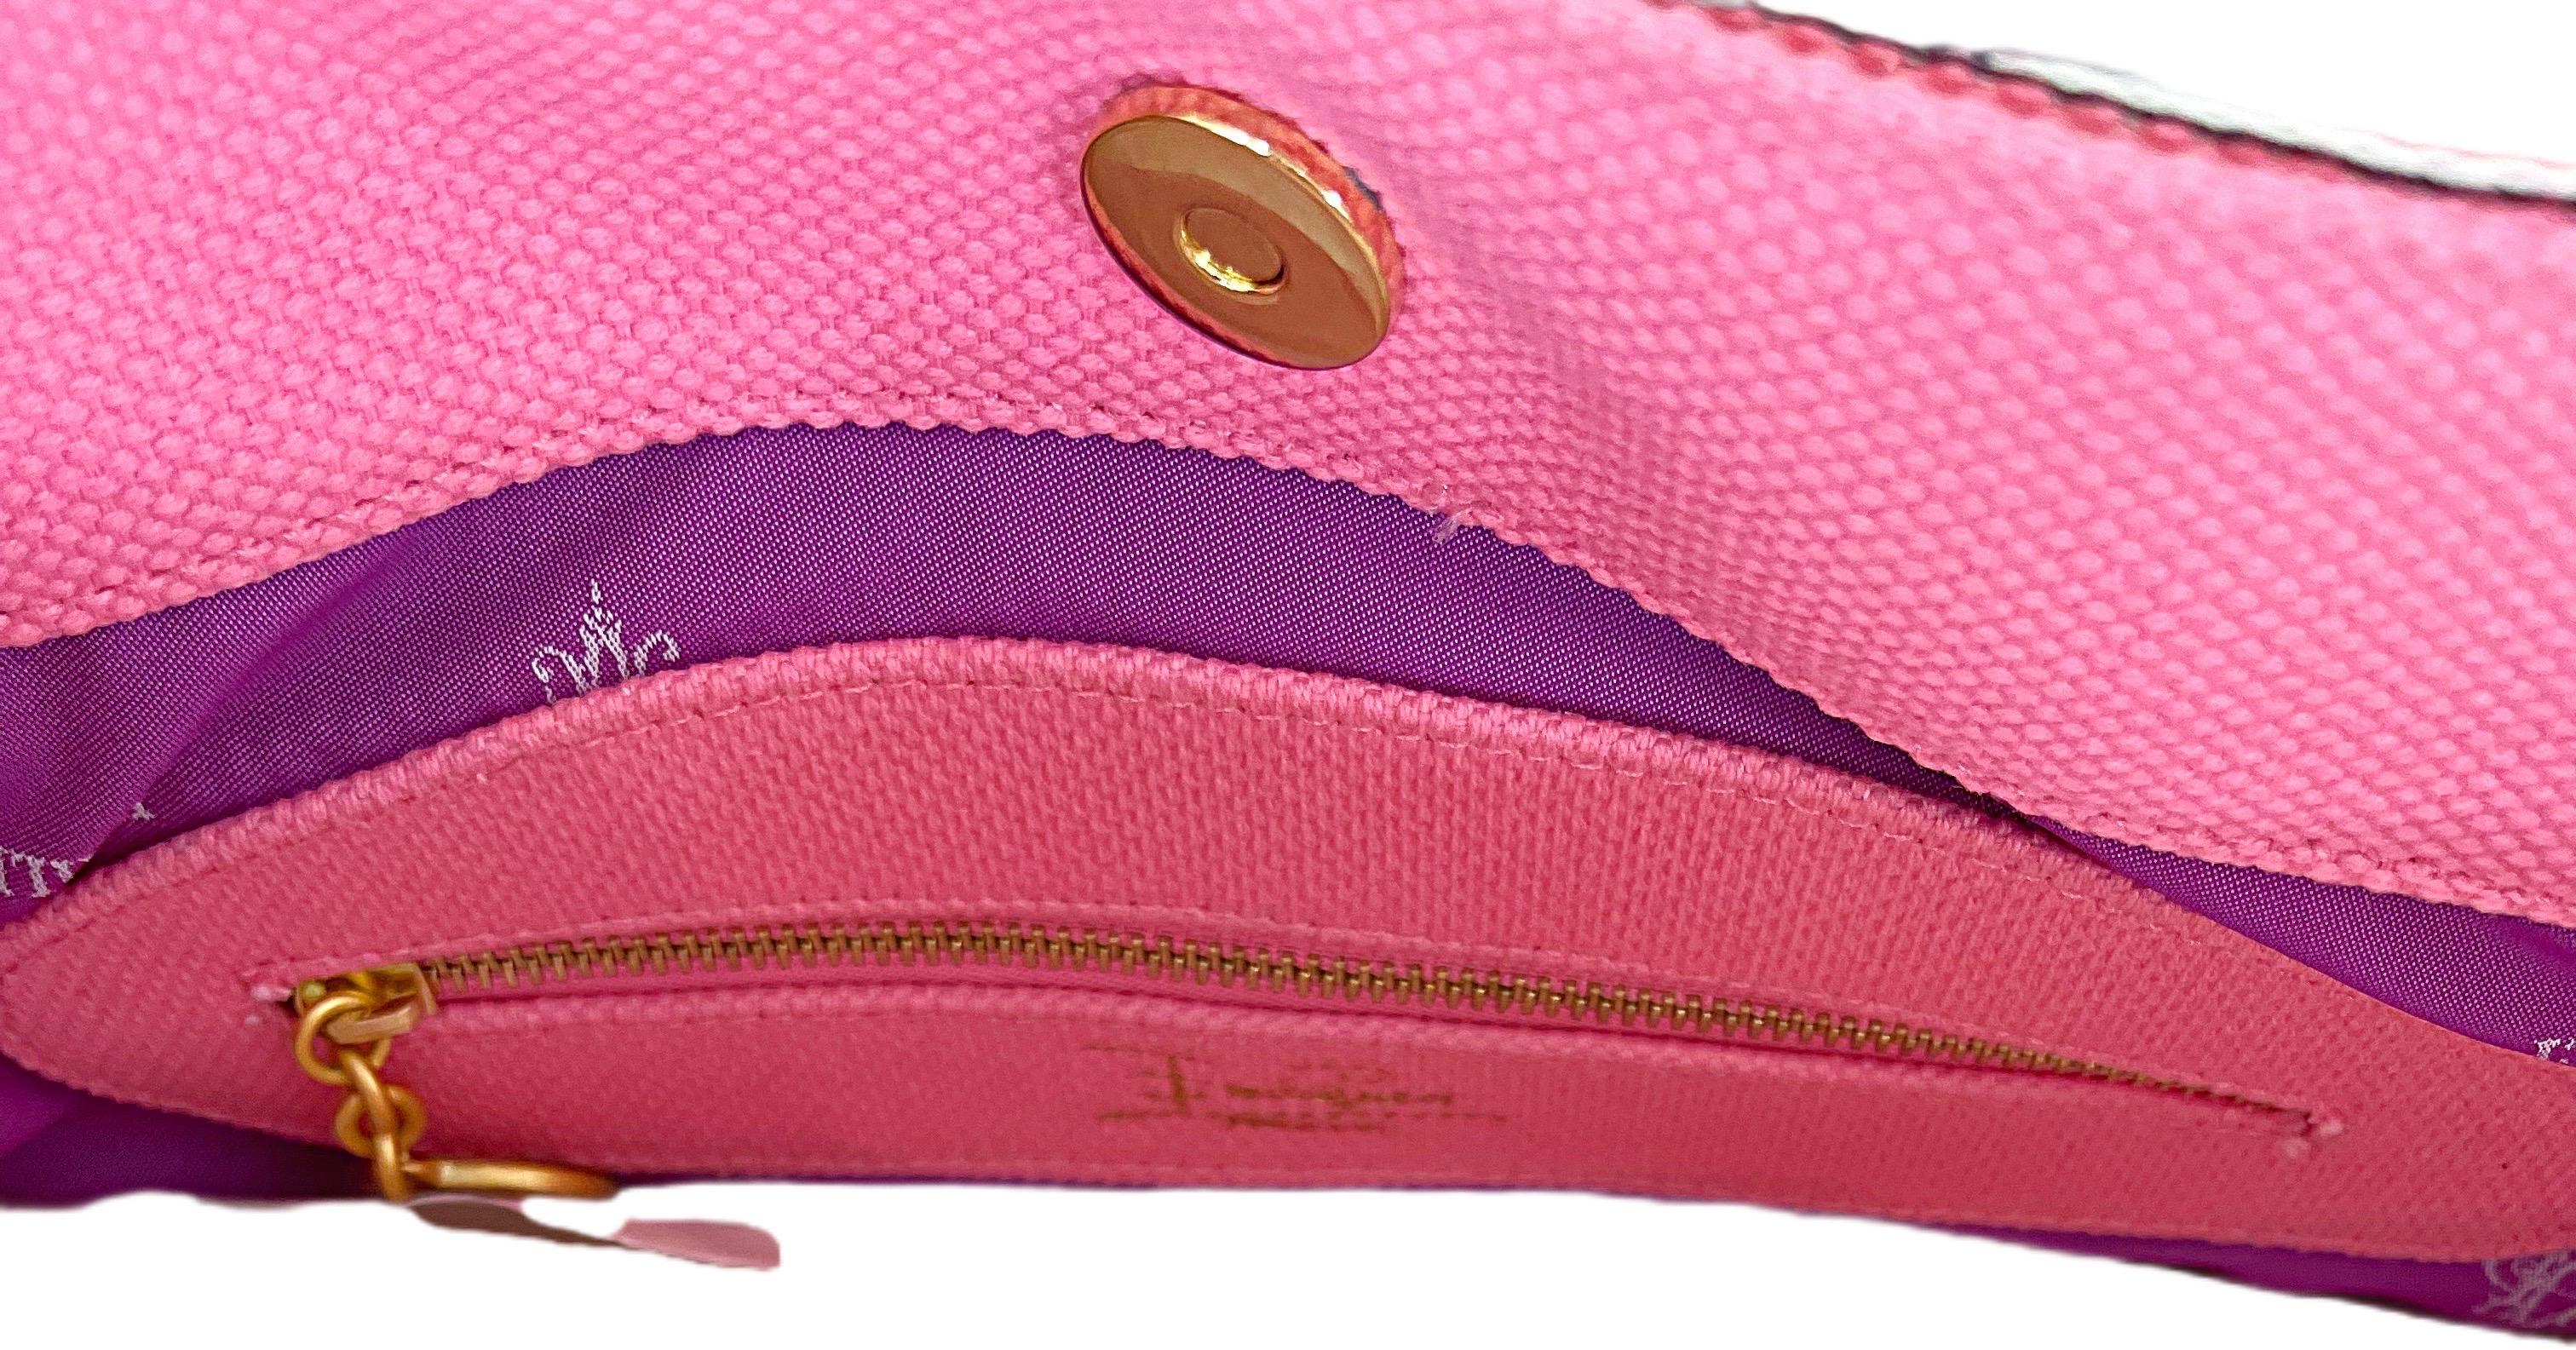 NWT Emilio Pucci 2000s Bubblegum Pink Kaleidoscope Mosaic Satchel Handbag Purse For Sale 7